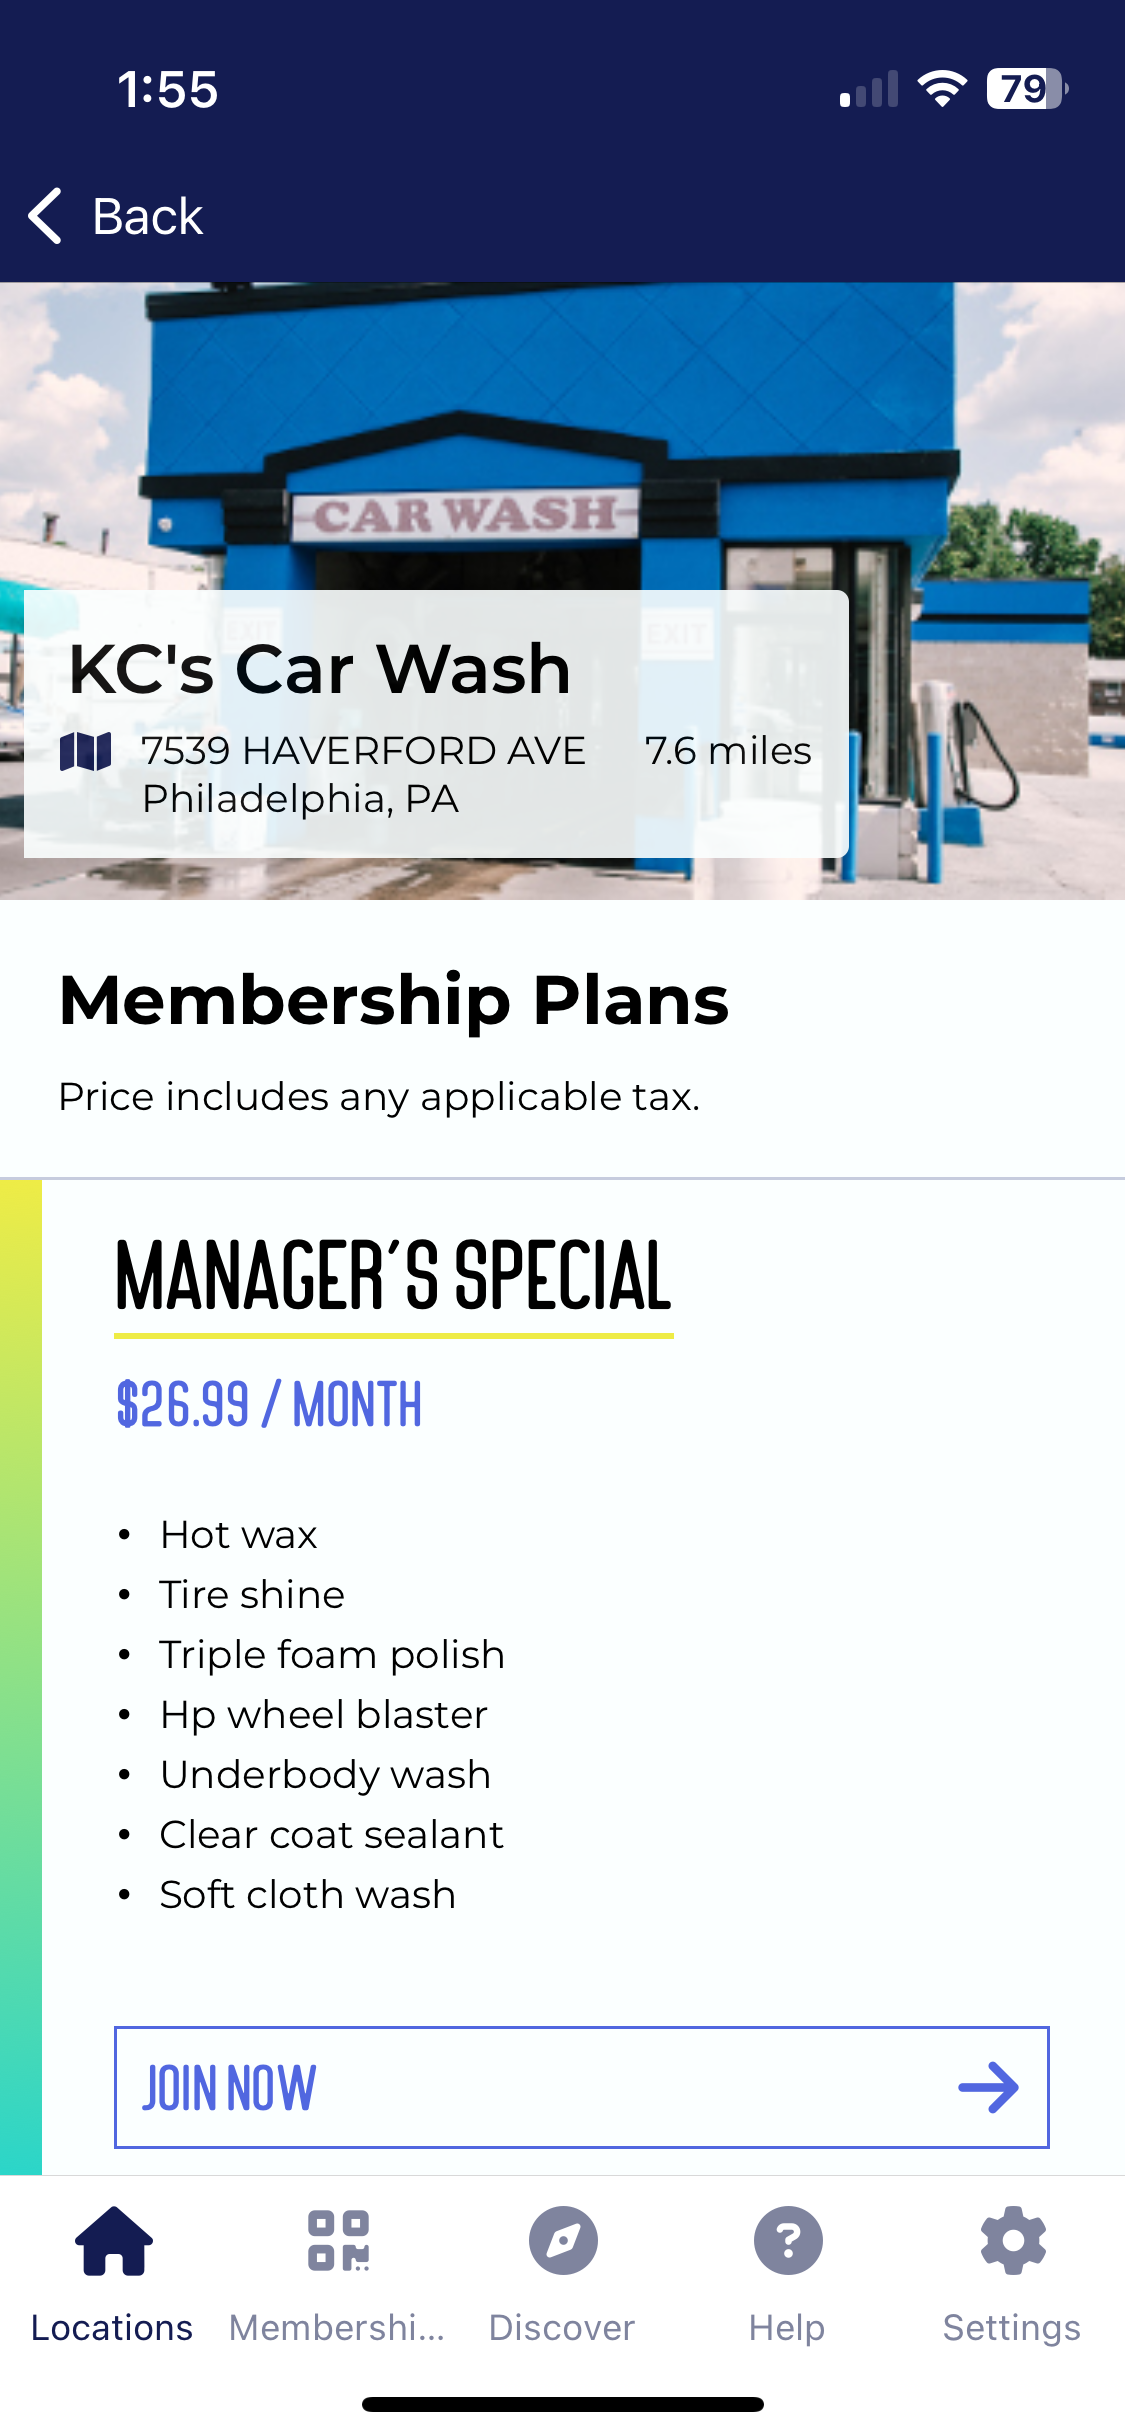 EverWash Unlimited Car Wash plans